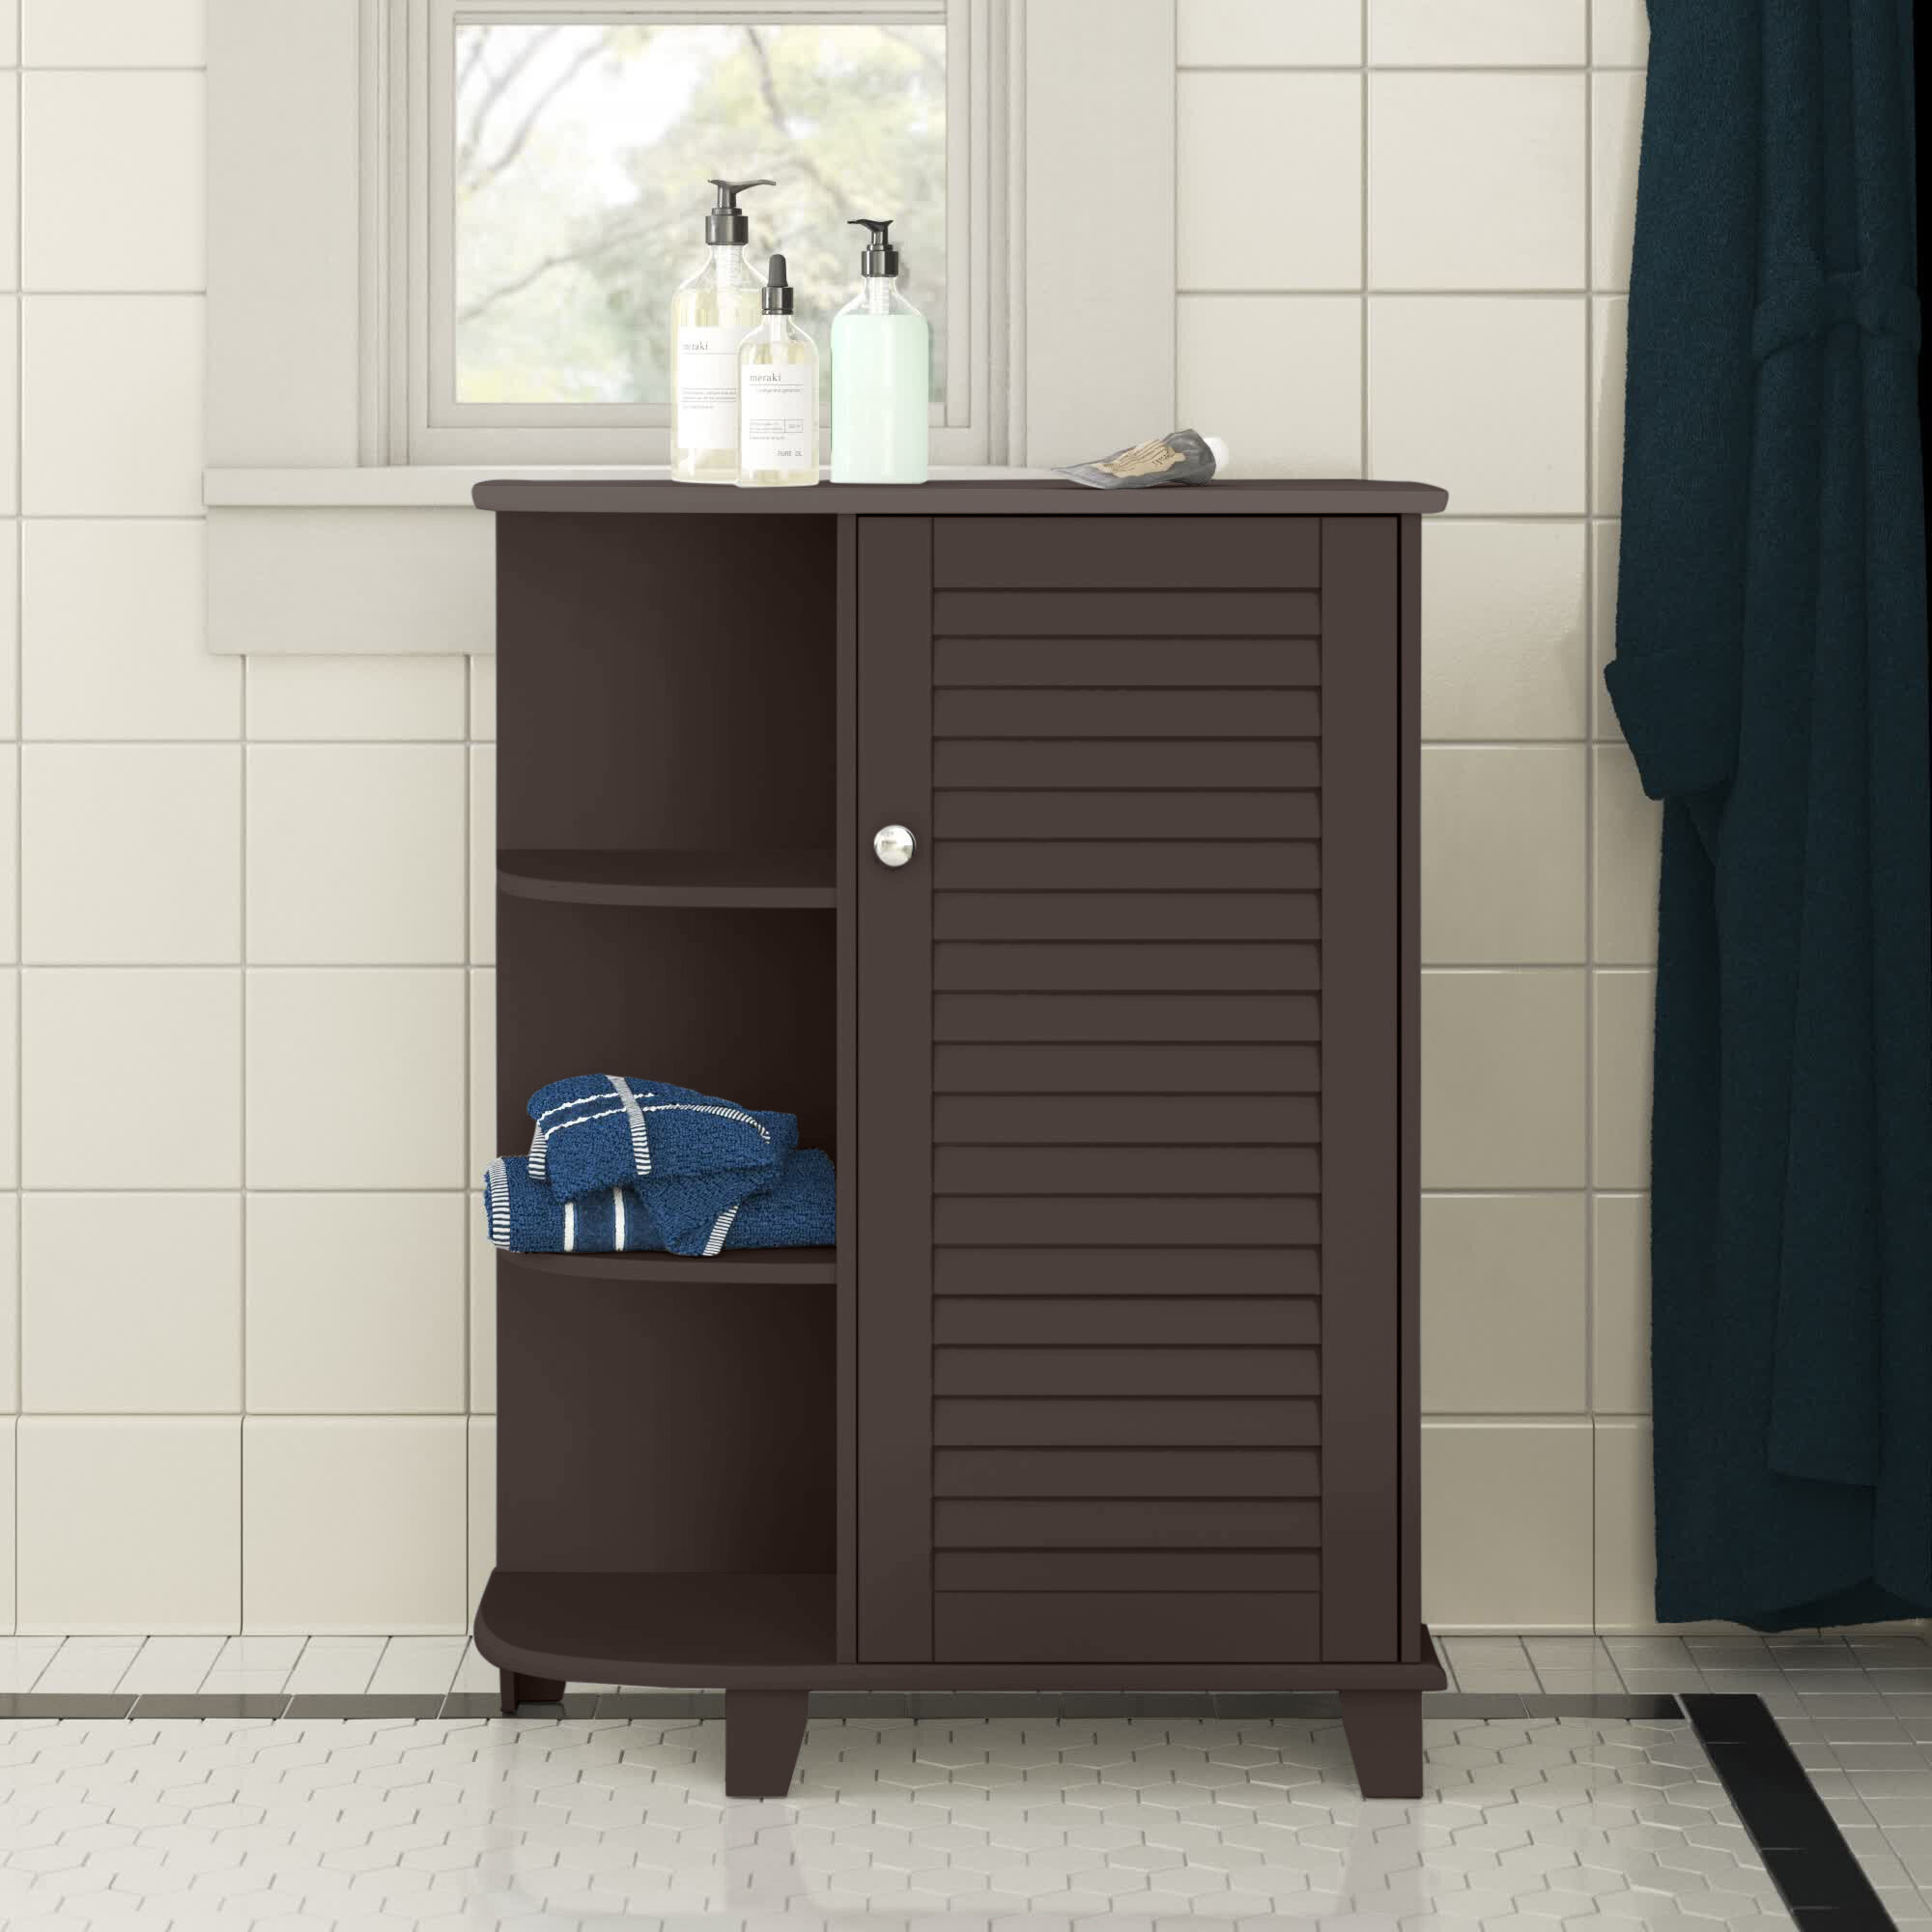 Details about   Bathroom Floor Cabinet Free-Standing Storage Cabinet with Inner Adjust Shelves 